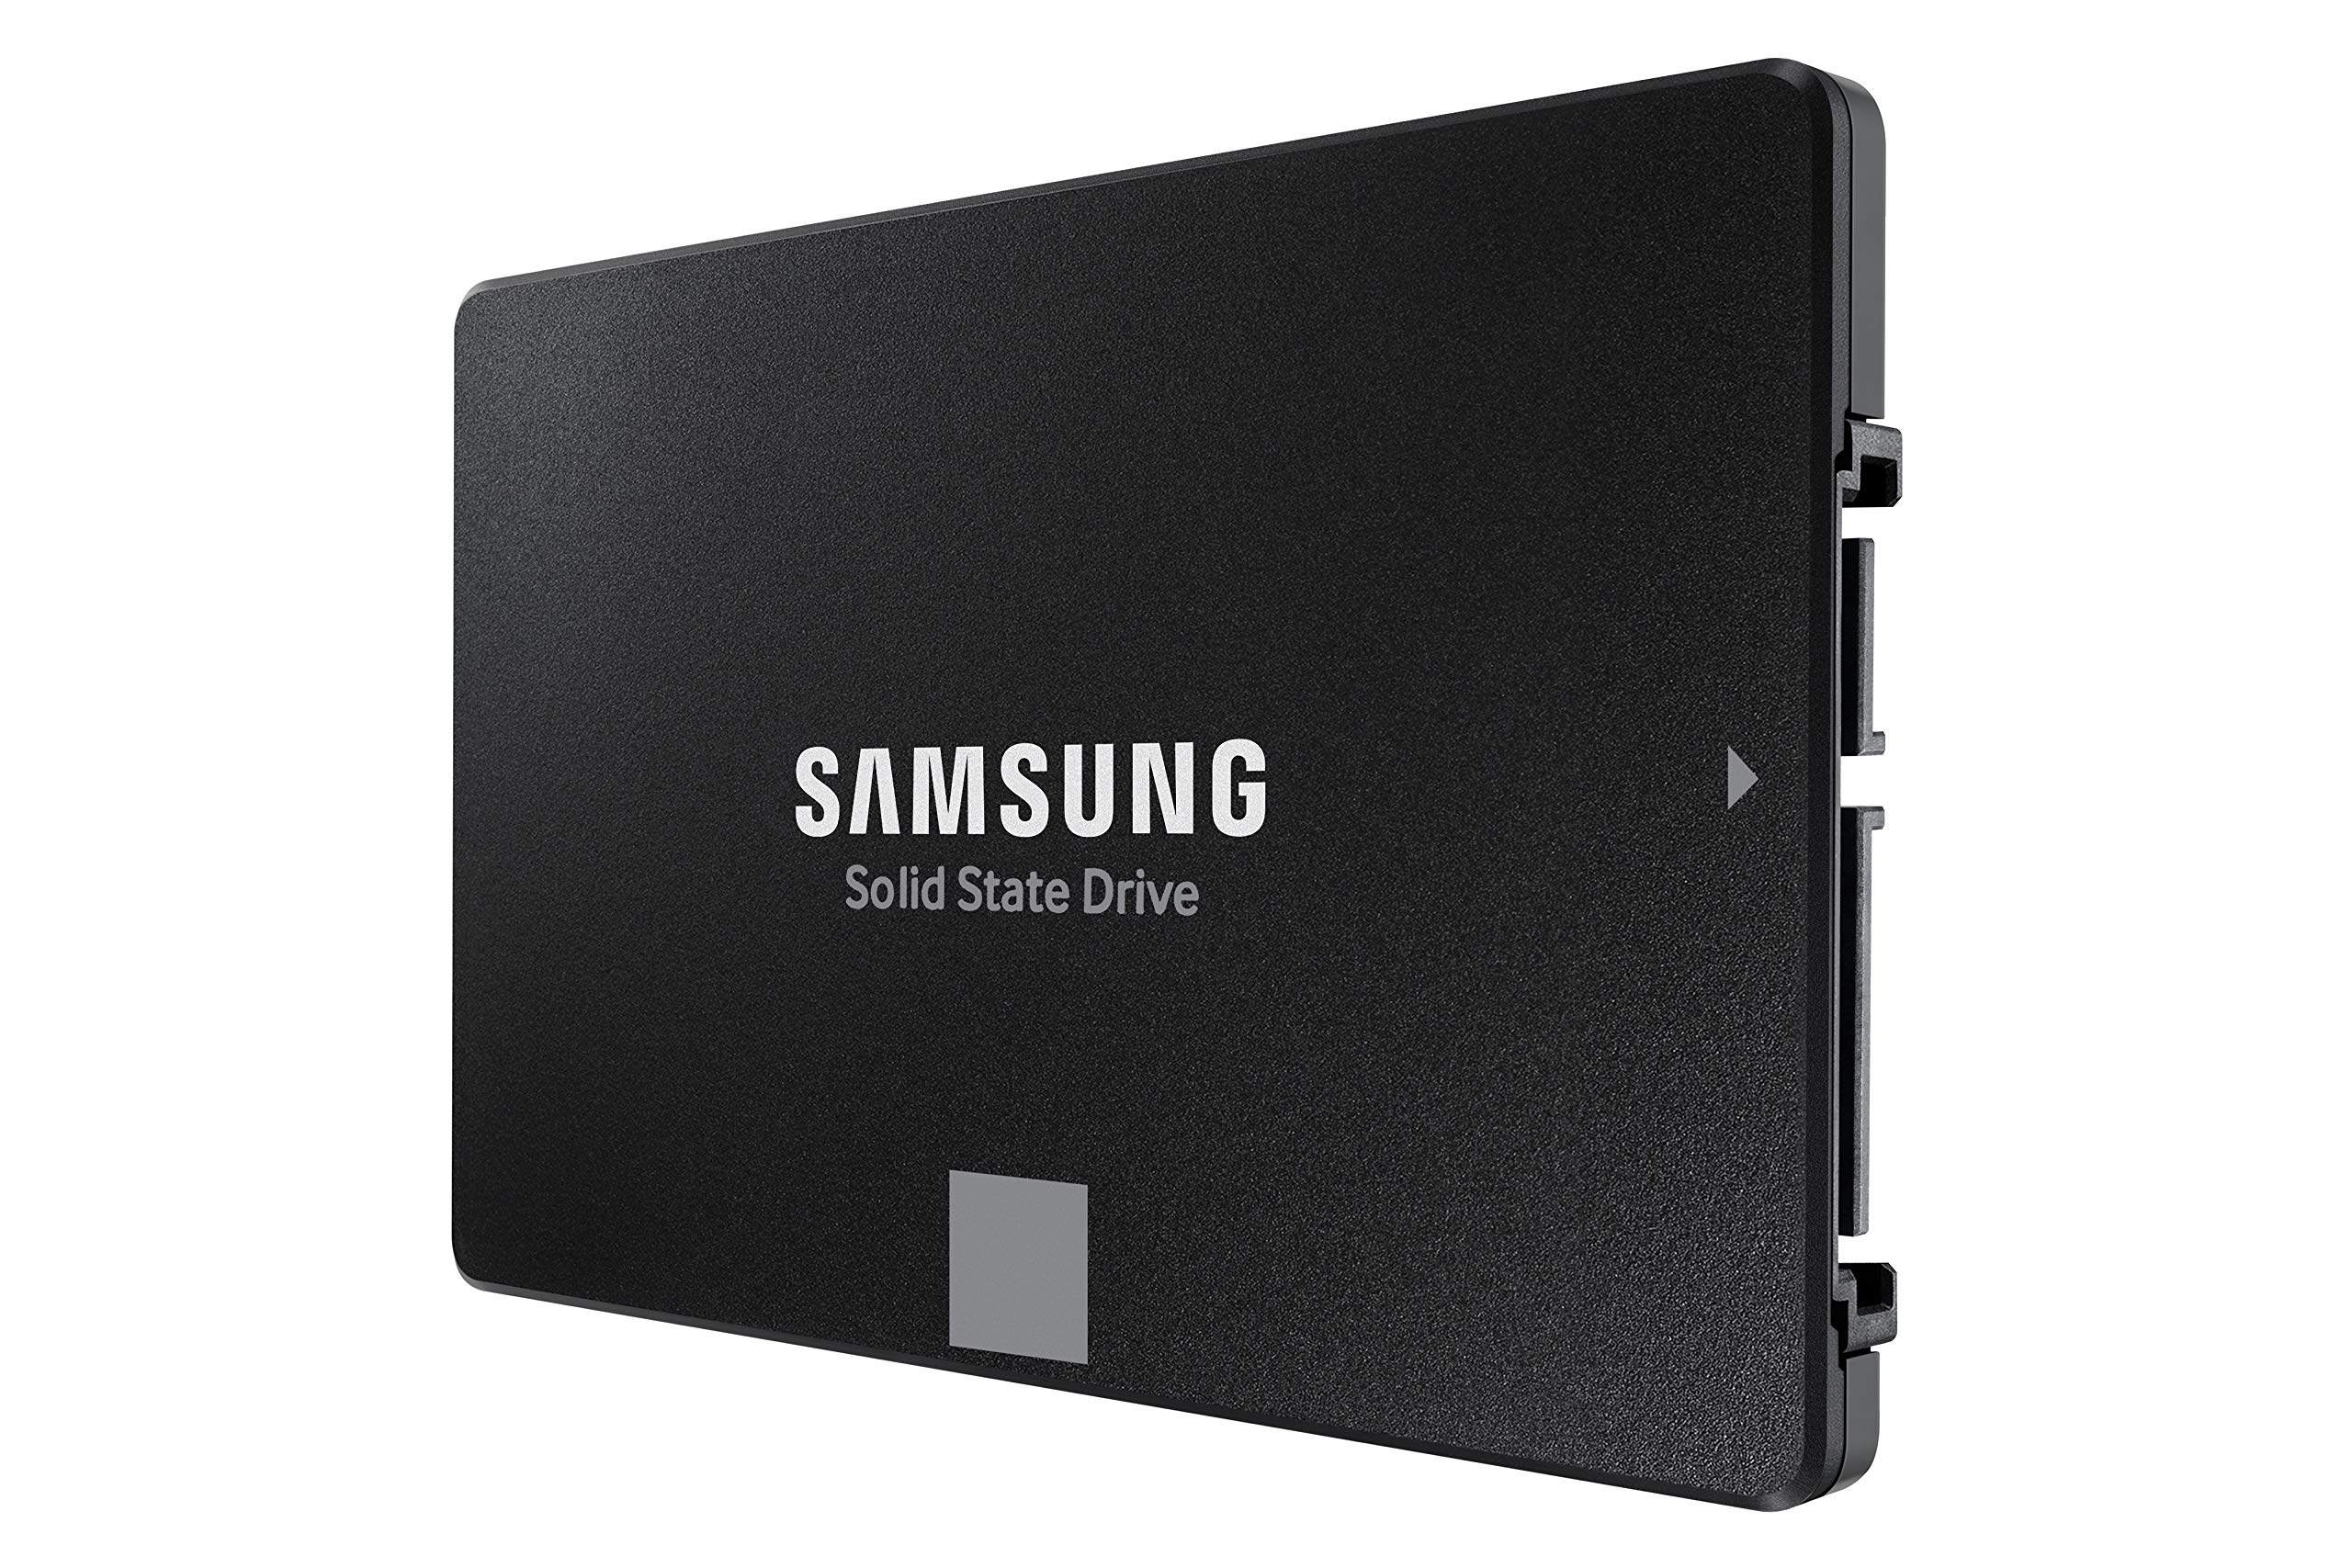 SAMSUNG Electronics 870 EVO 2TB 2.5 Inch SATA III Internal SSD (MZ-77E2T0B/AM)